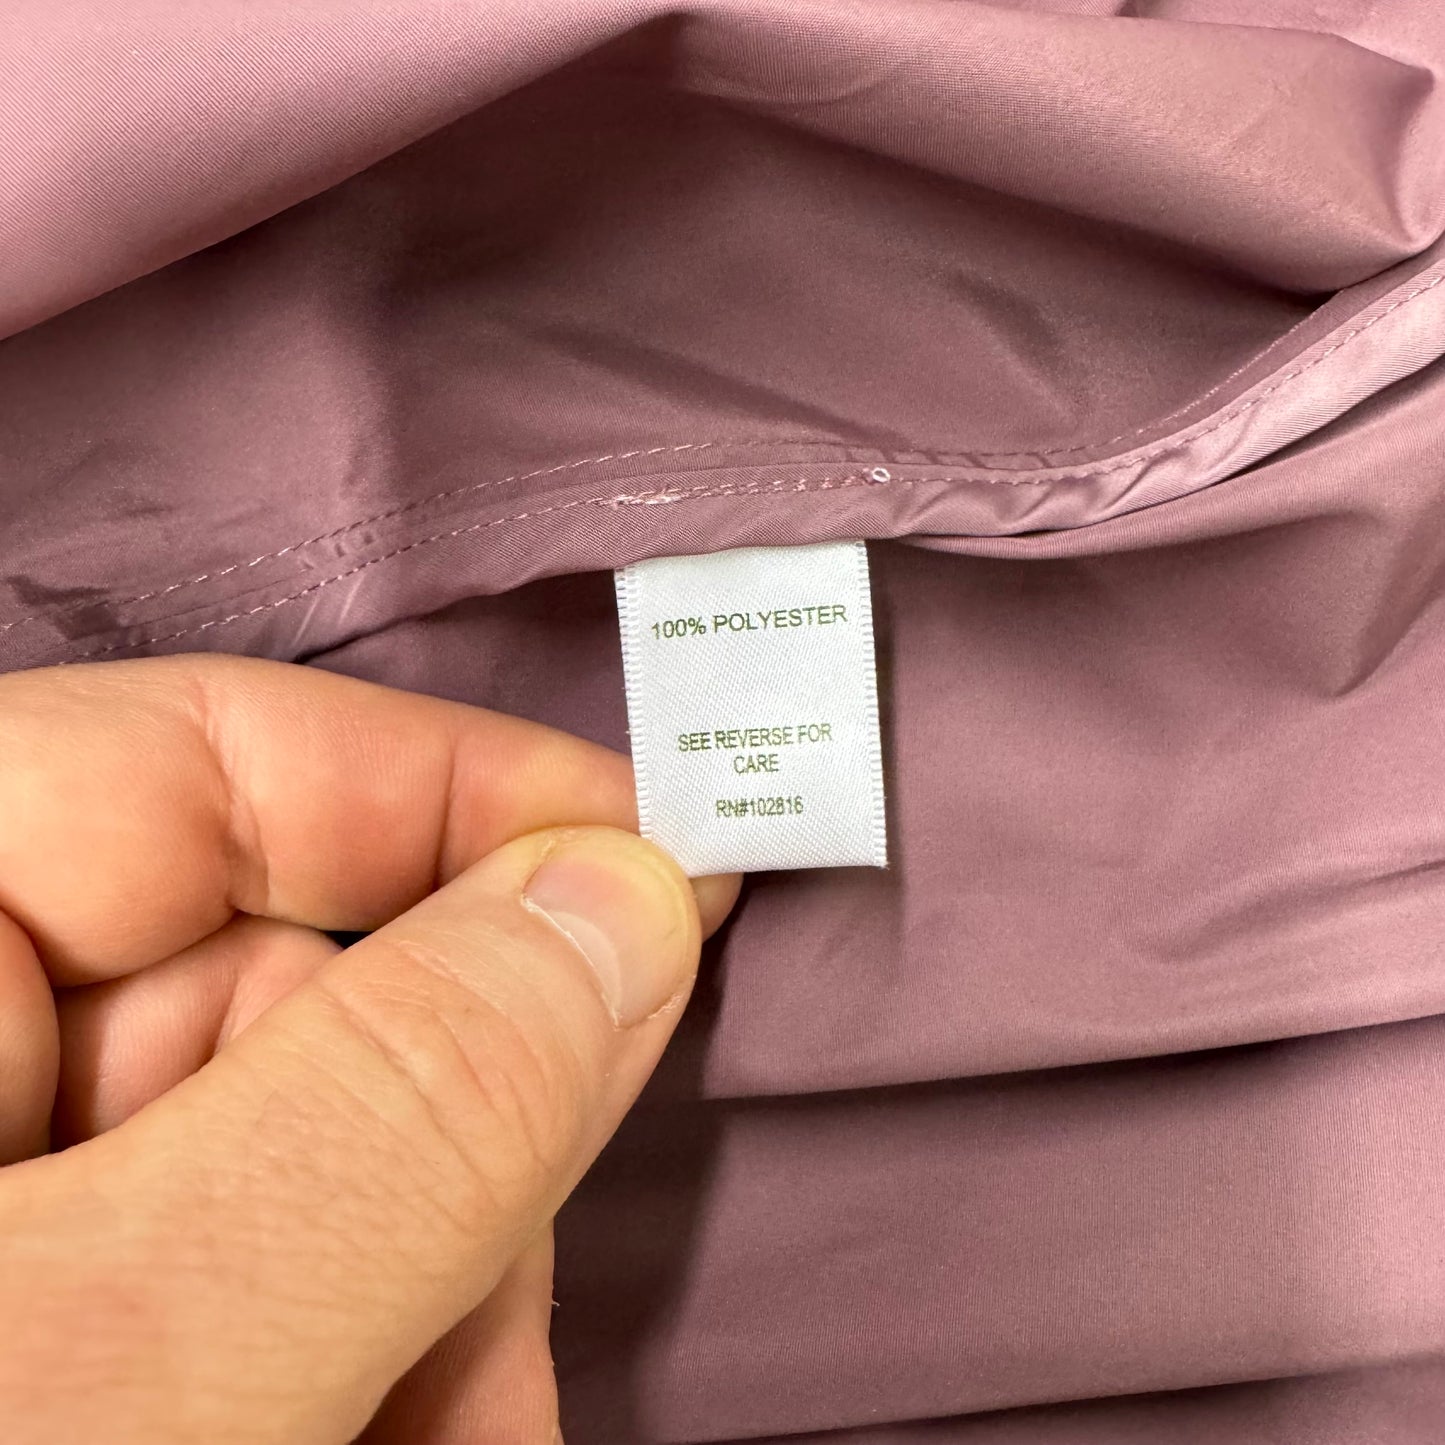 Garnet Hill | Hooded Dusty Rose Rain Resistant Jacket | Color: Mauve | Size 10